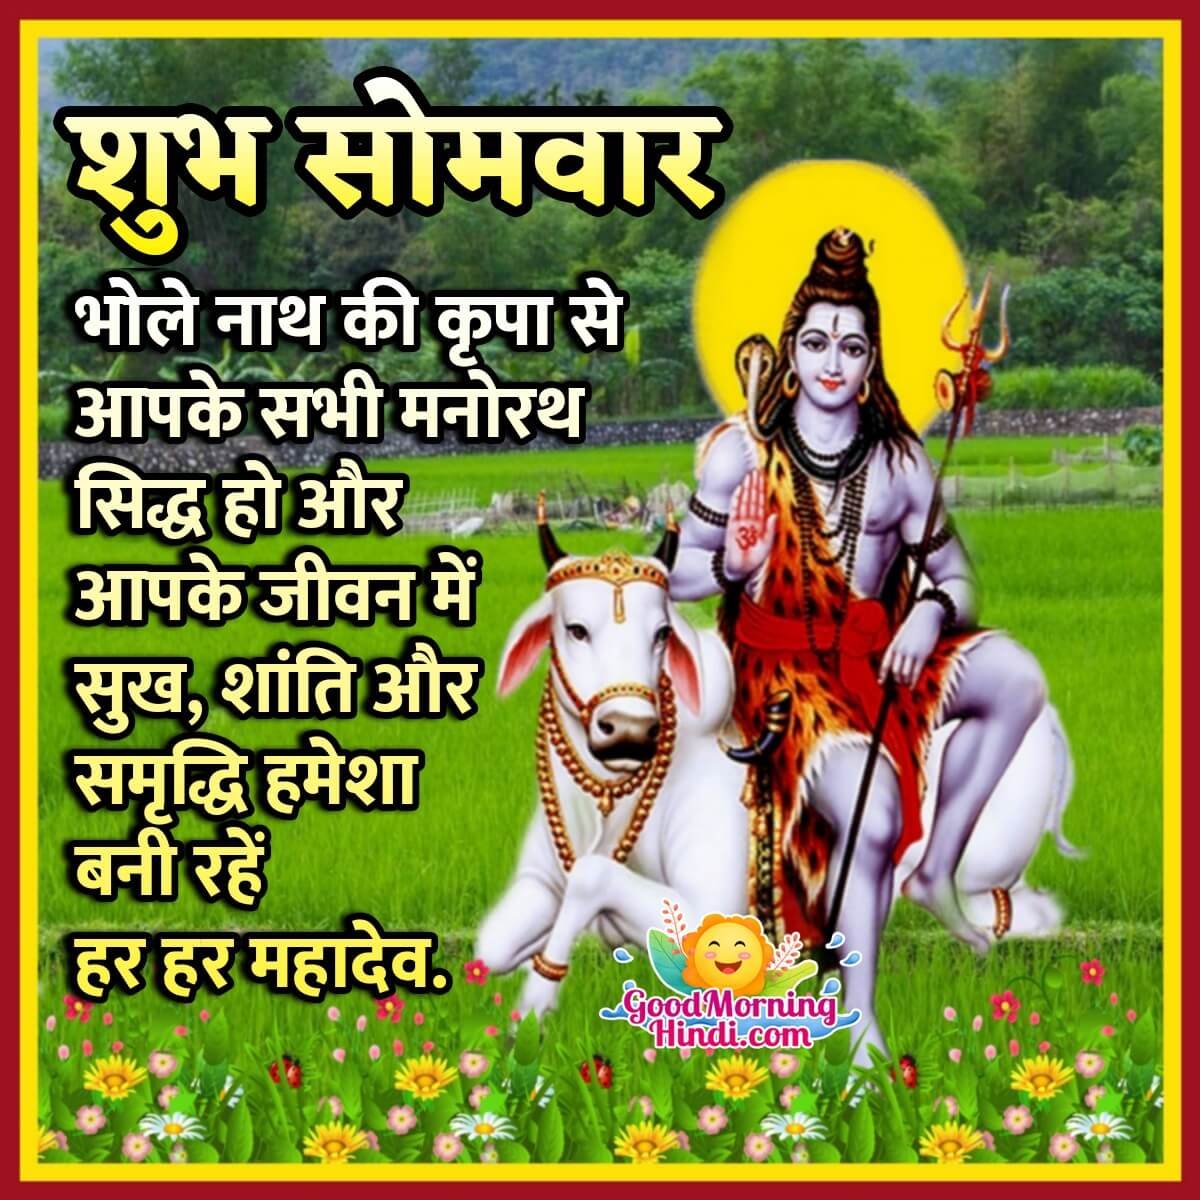 Lord Shiva Somvar Hindi Image